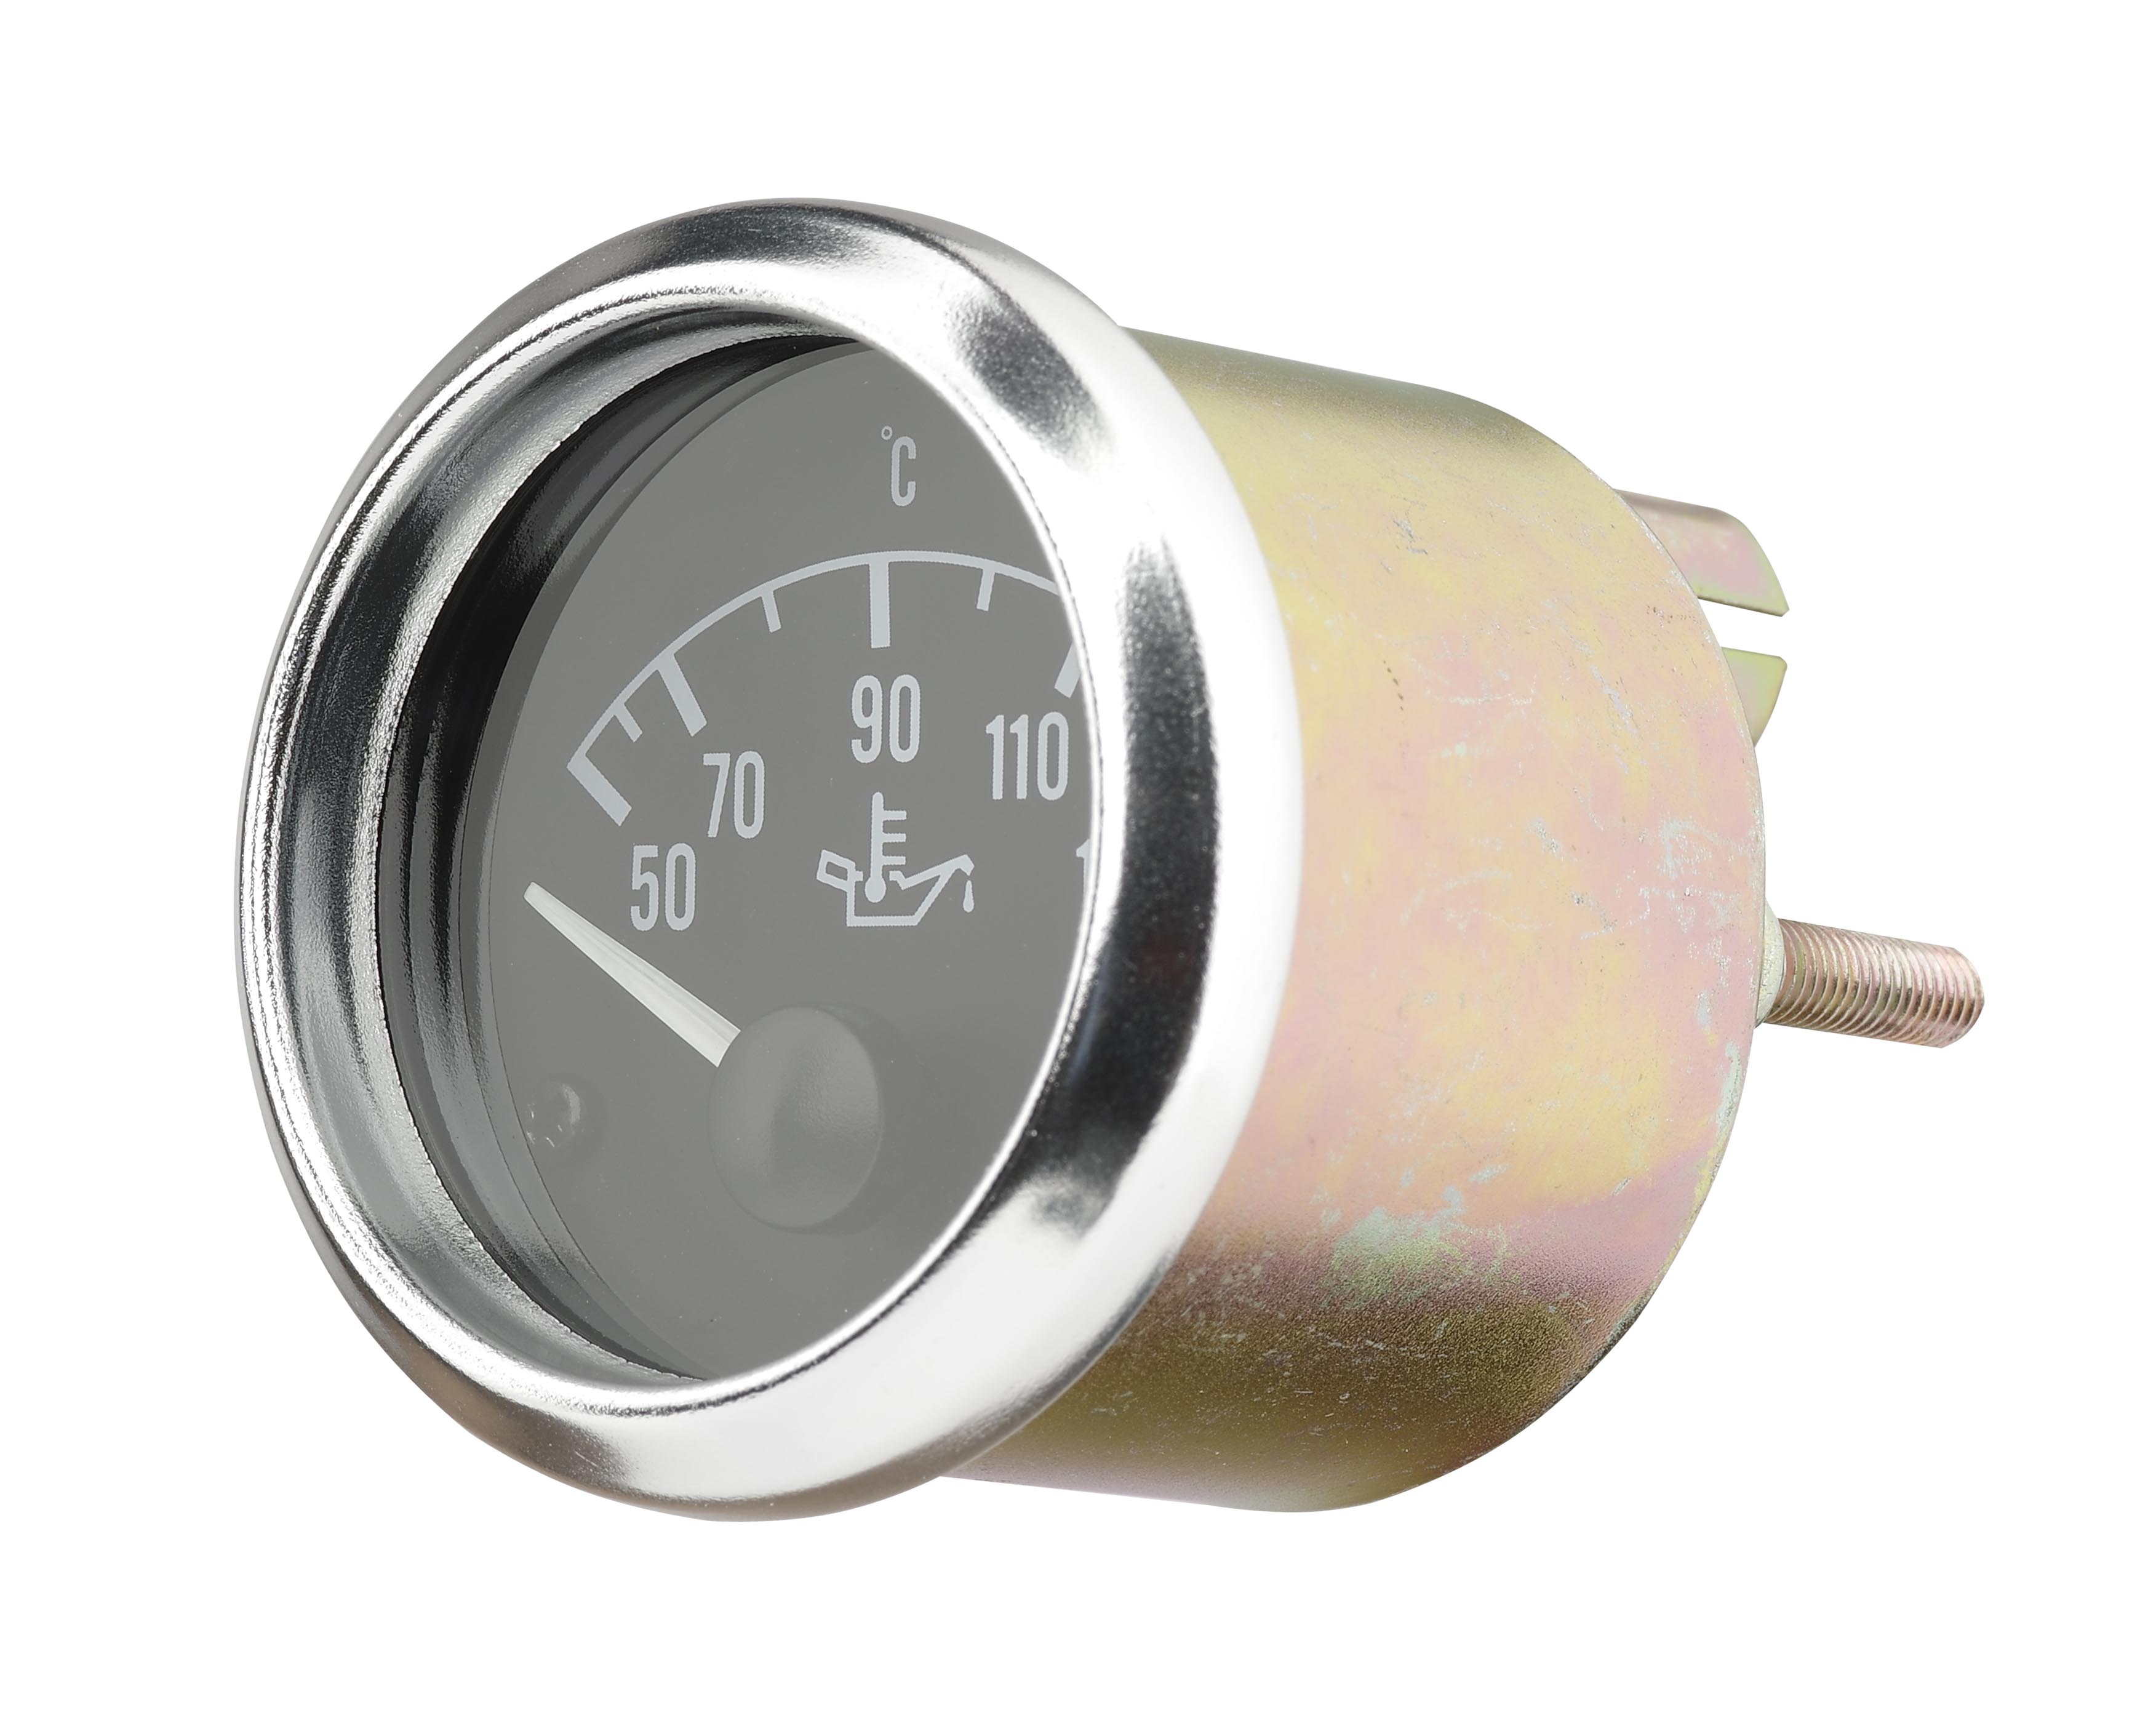 Öltemperaturinstrument
Oil temperature gauge
Instrument temp